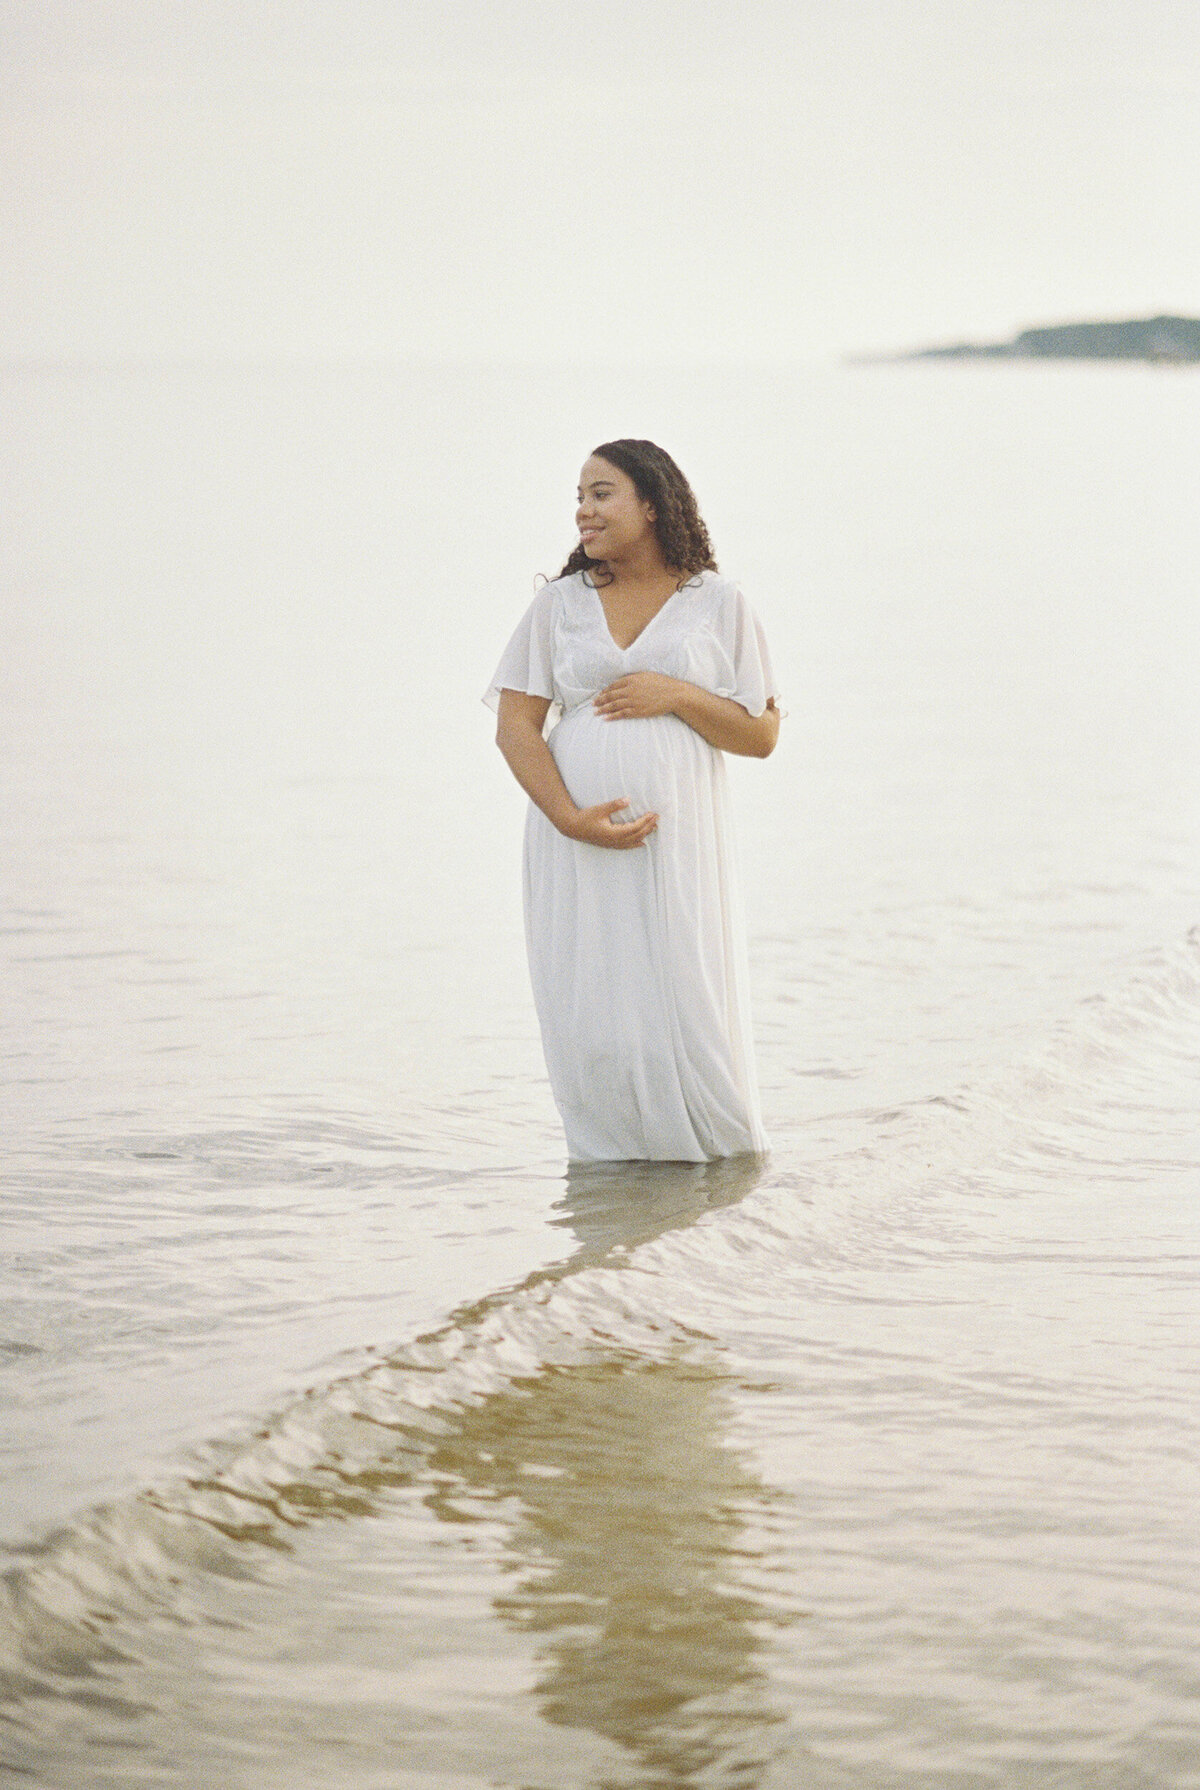 Tallahassee-Maternity-Photographer-105